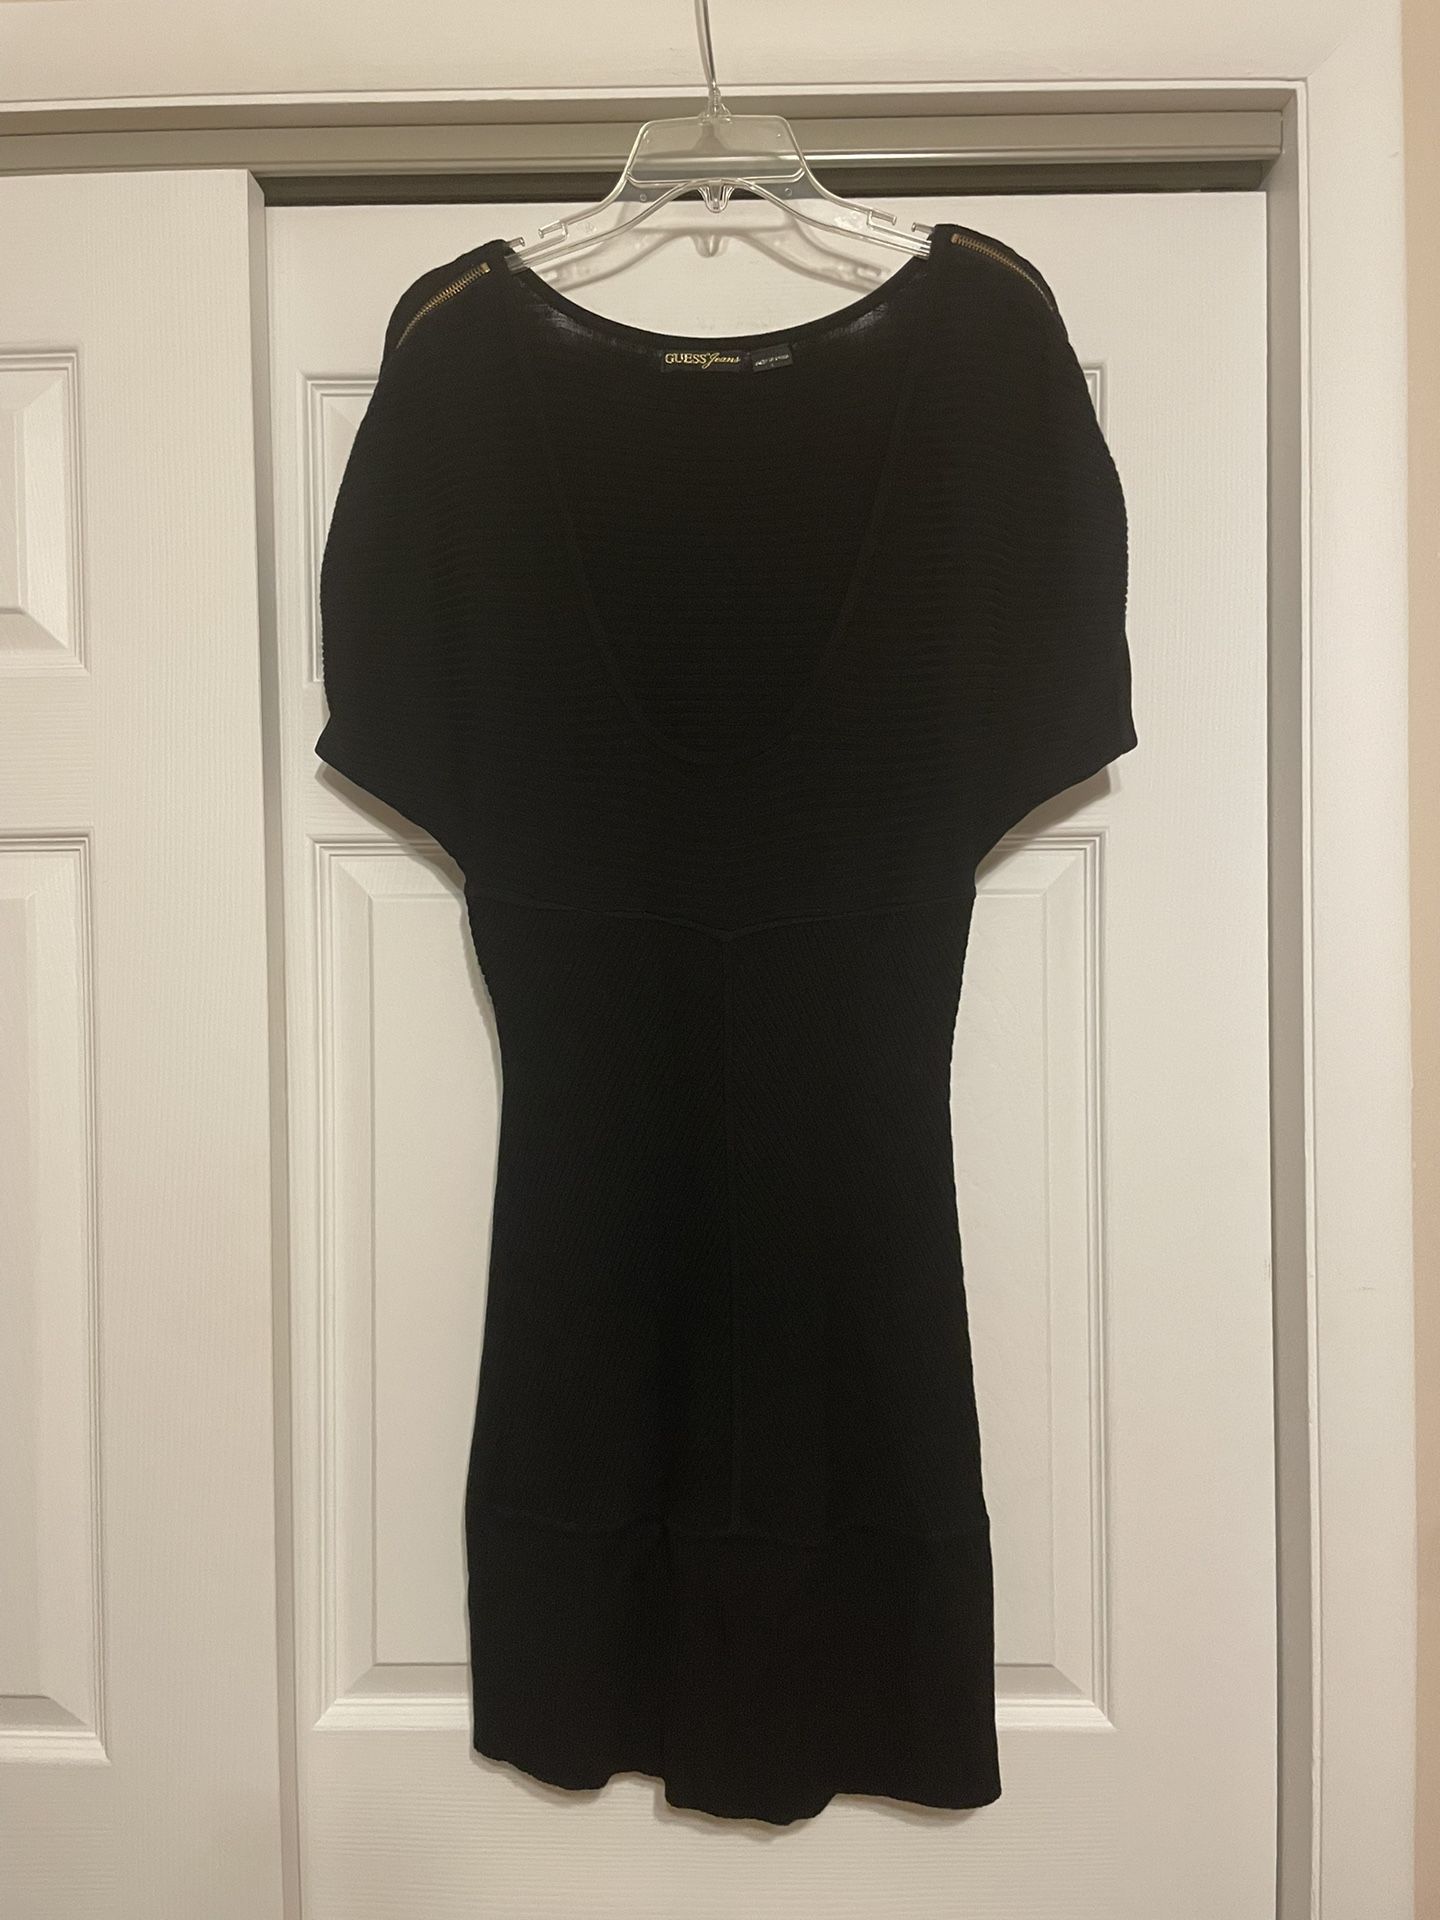 Guess Black Sweater Dress - Size Large